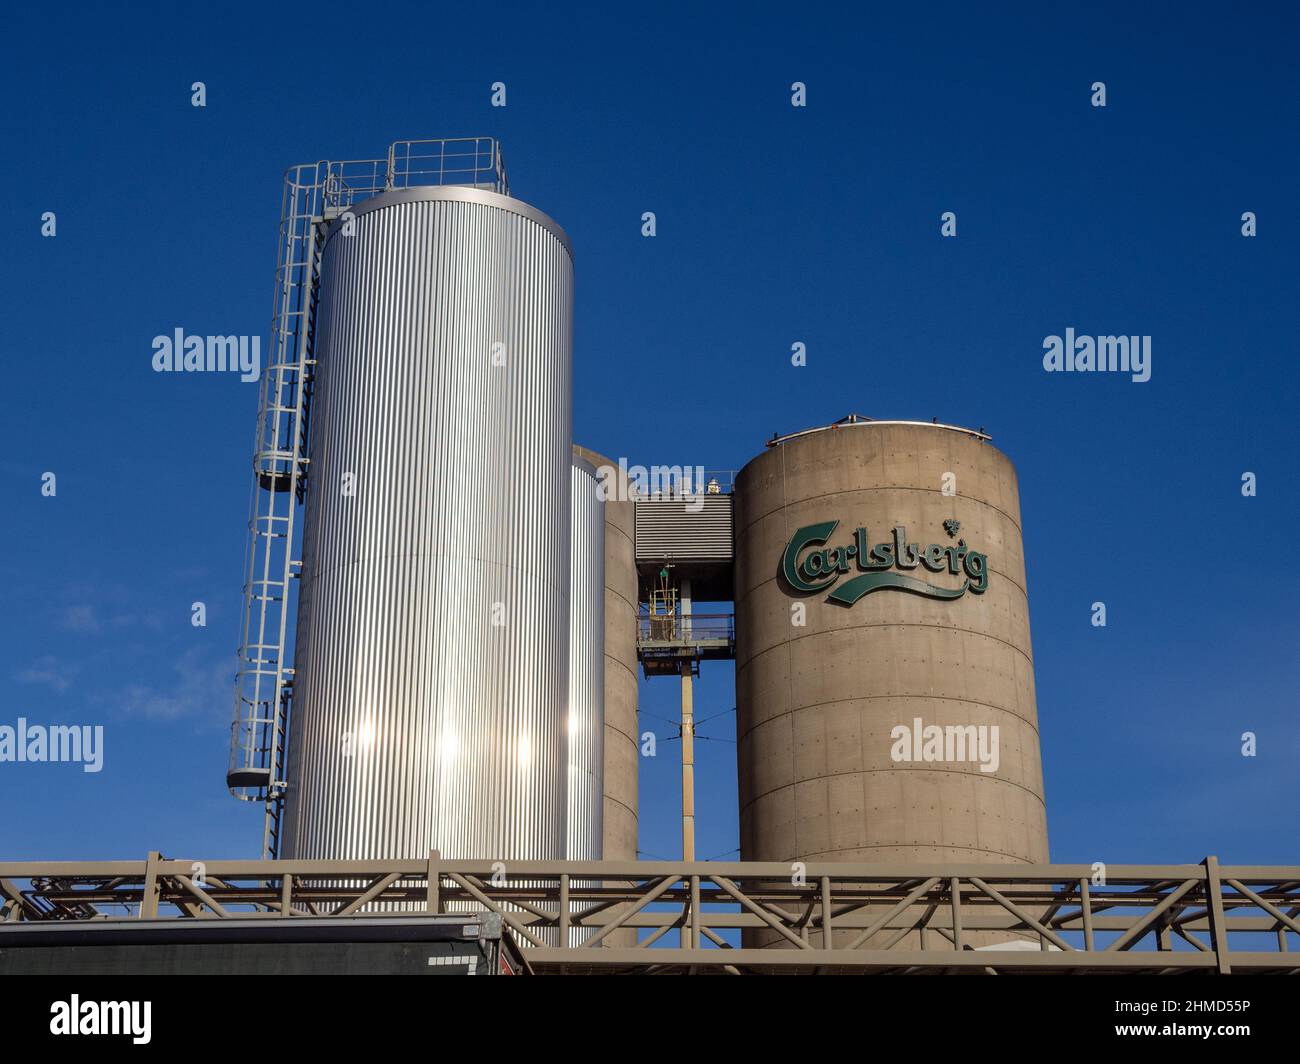 Storage vats and chimney, part of the Carlsberg Brewery complex, Northampton, UK Stock Photo